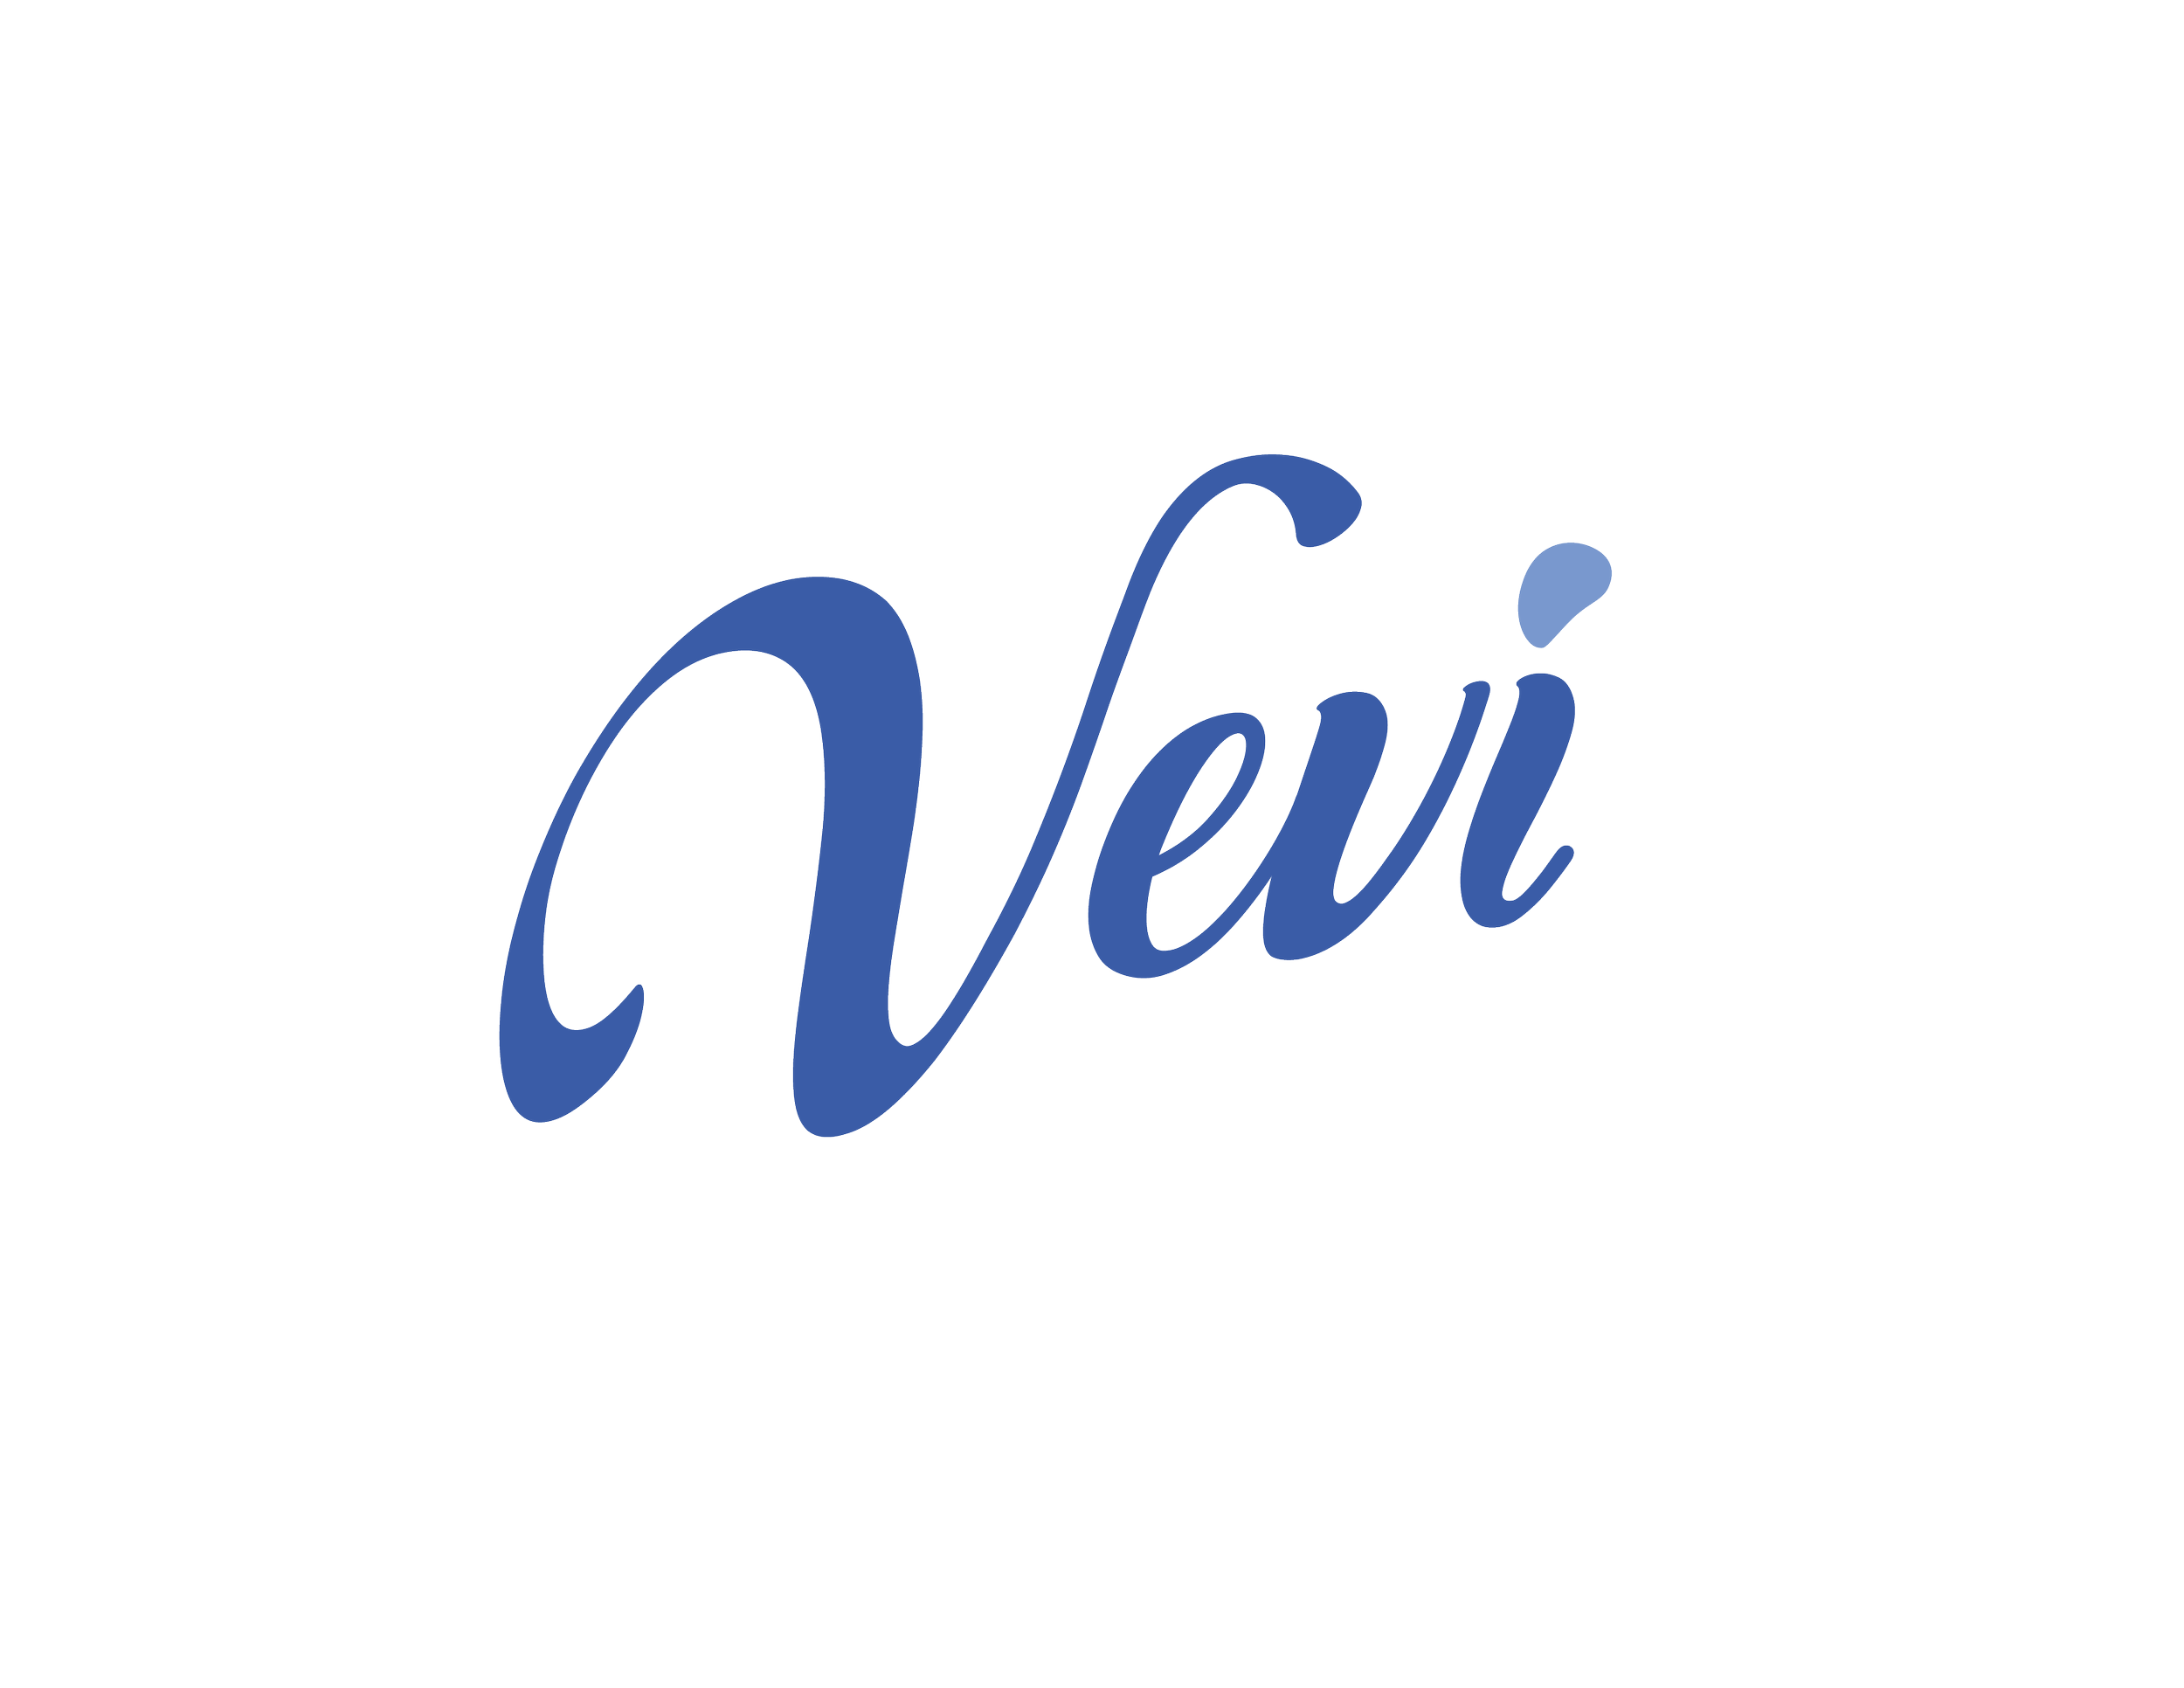 VEVI_final_reflex_blue-01.png